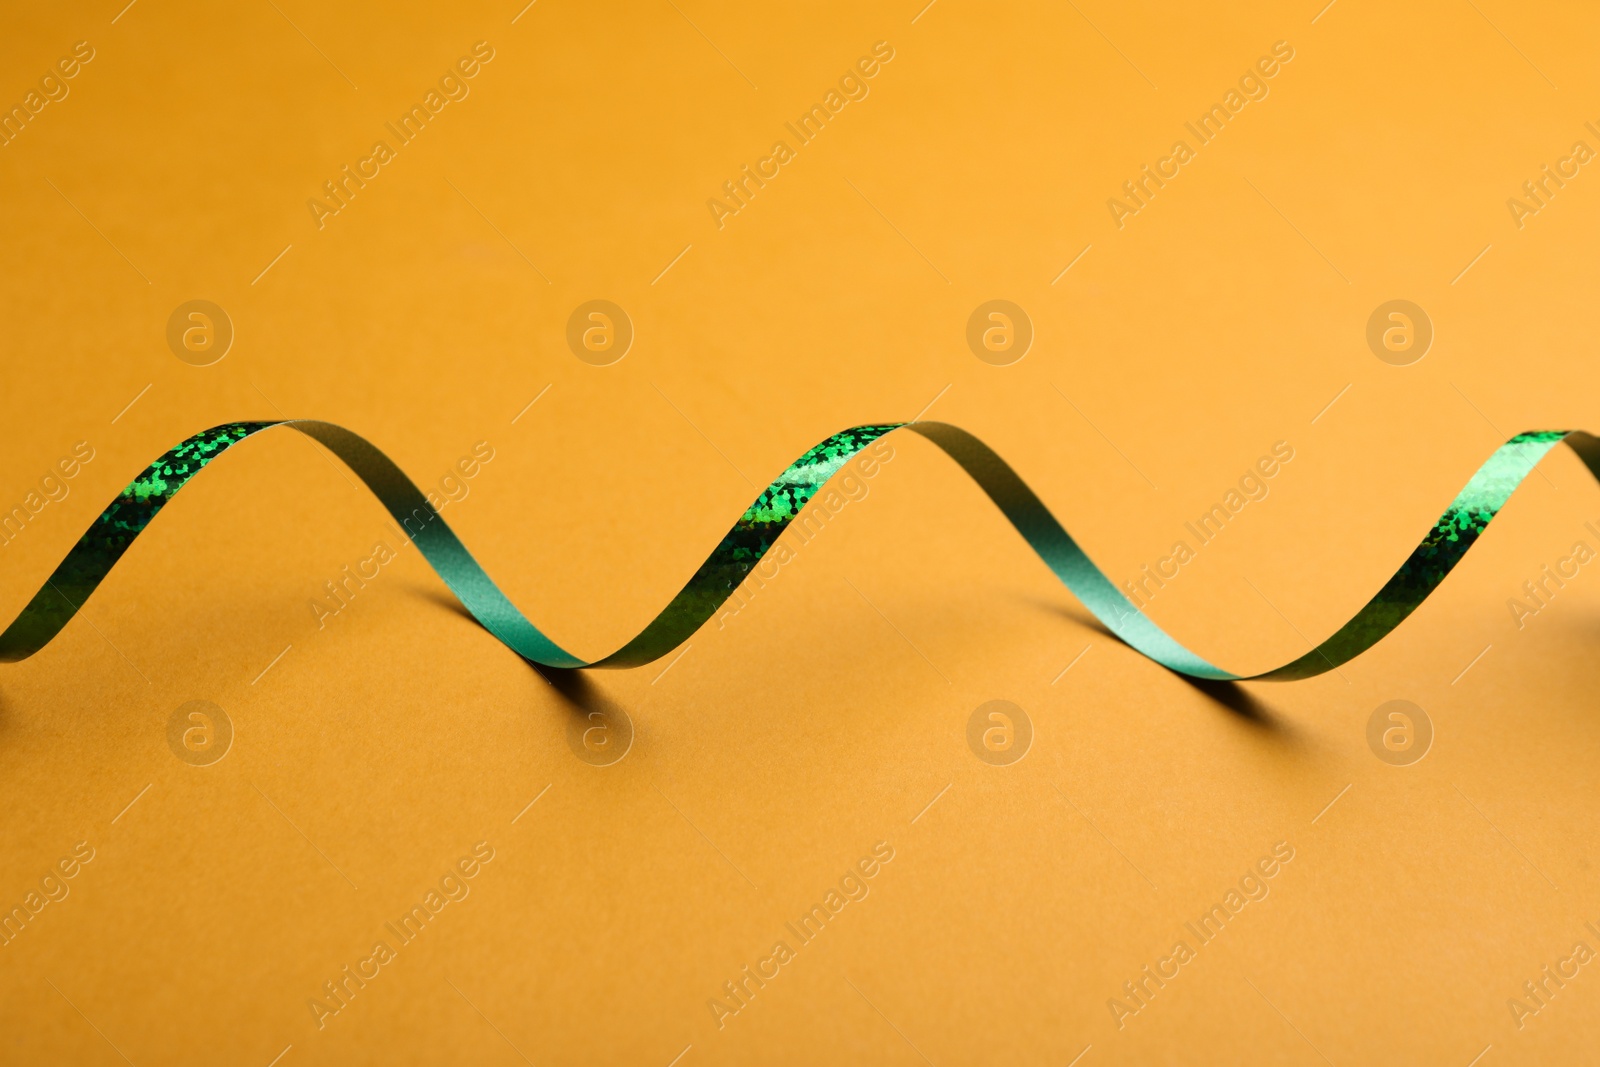 Photo of Shiny green serpentine streamer on orange background